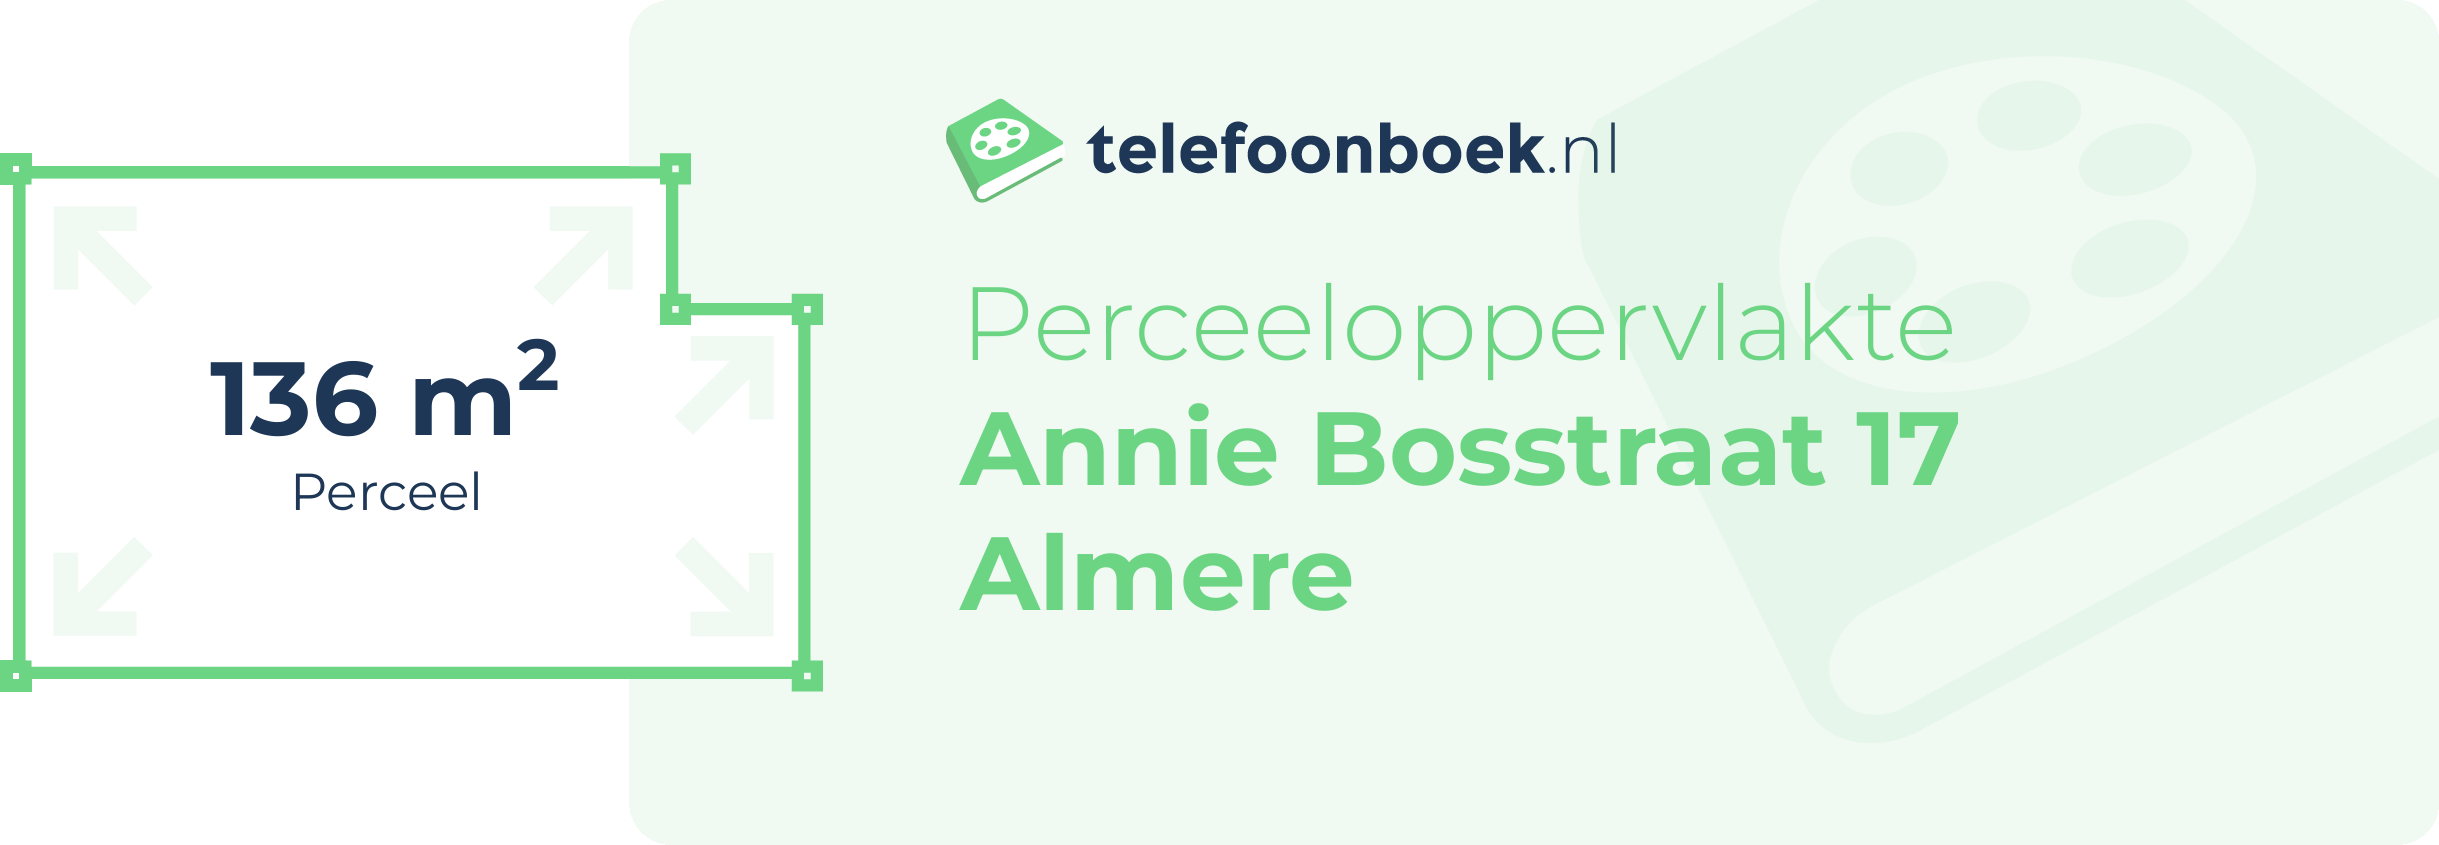 Perceeloppervlakte Annie Bosstraat 17 Almere